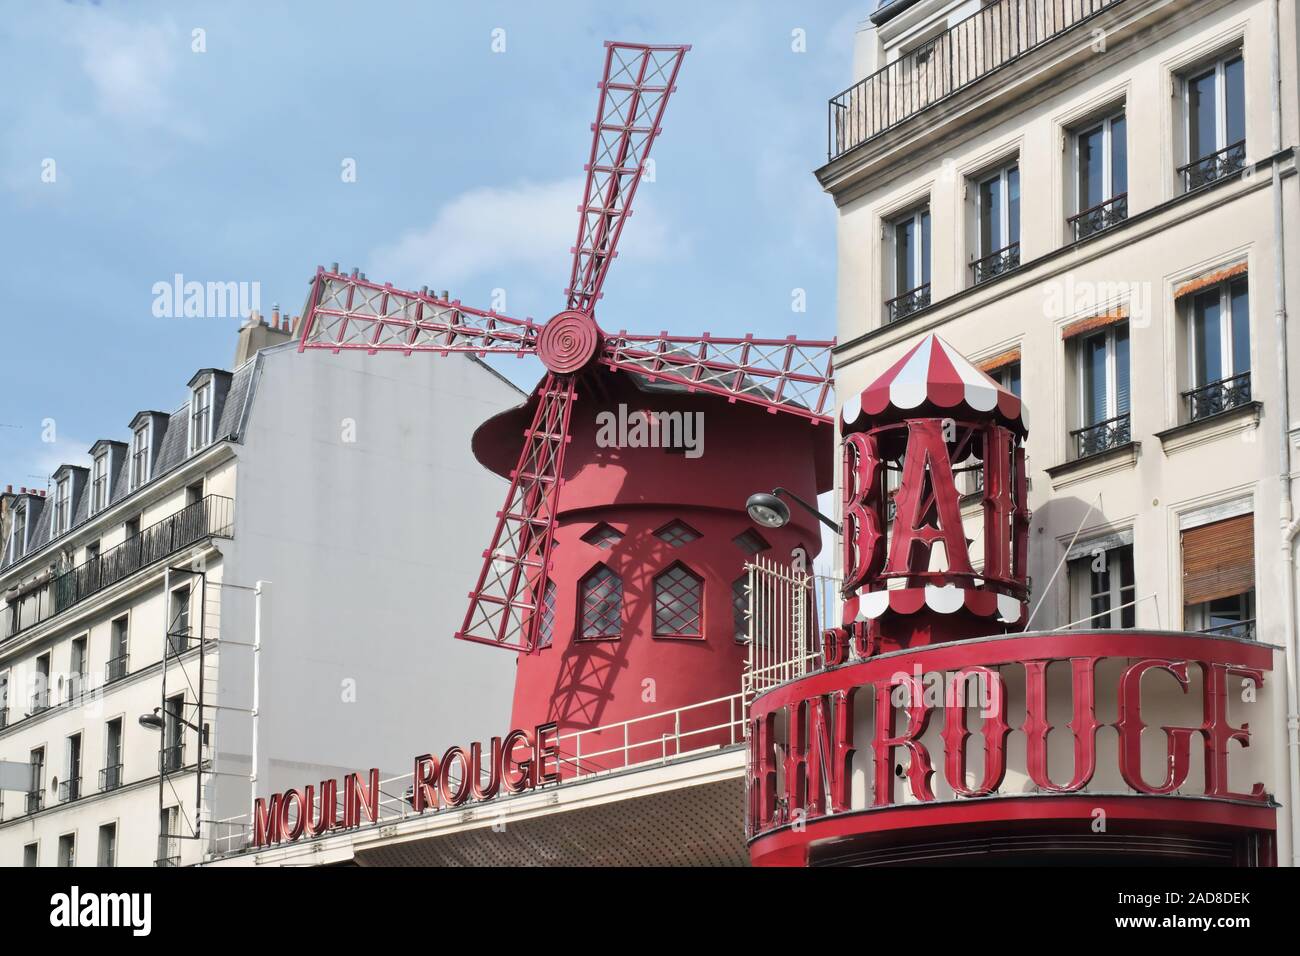 Moulin Rouge Stockfoto